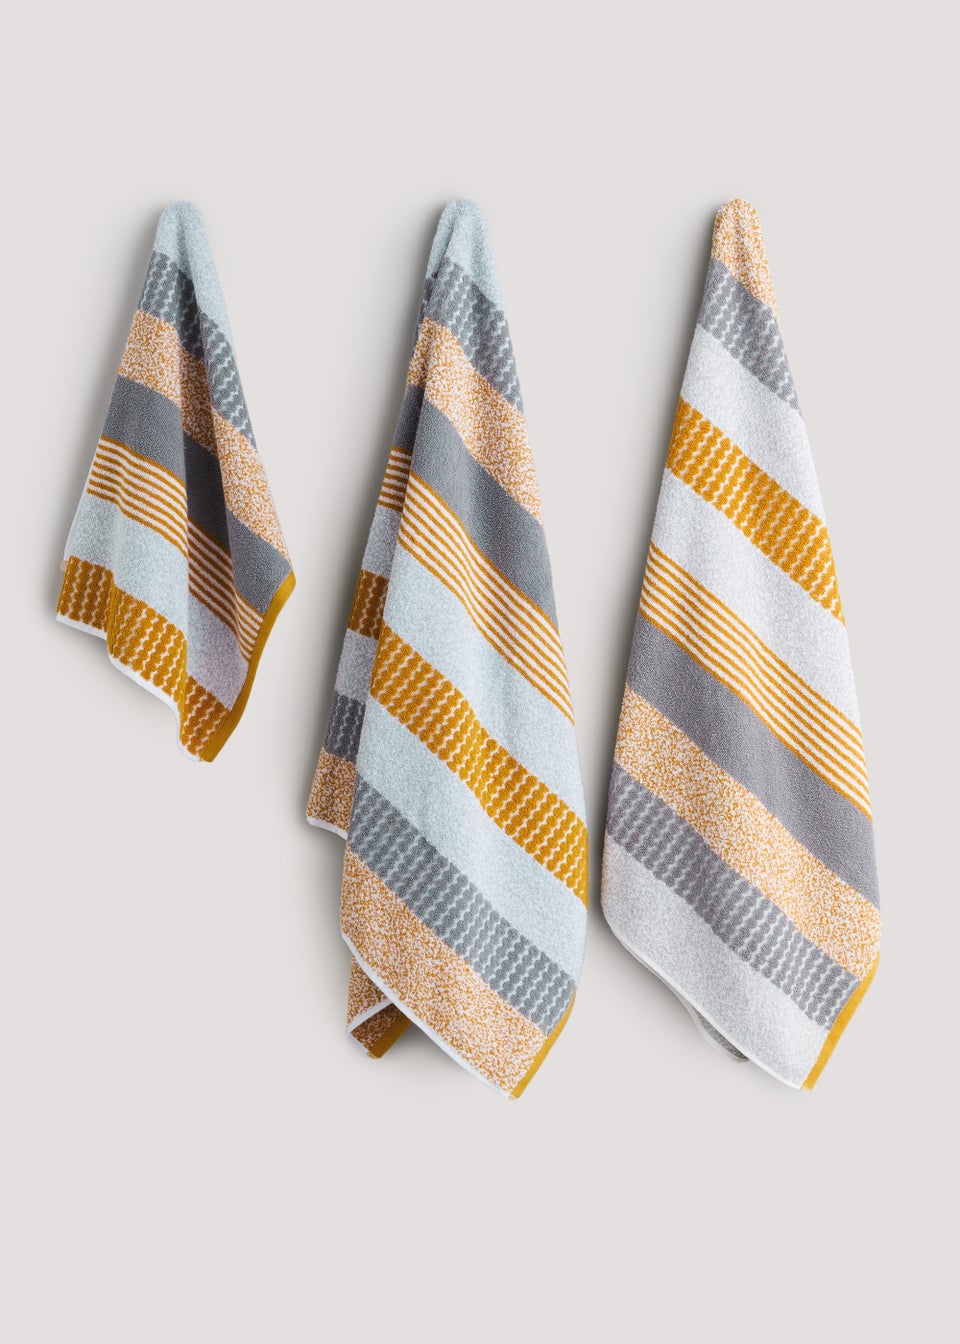 Yellow Stripe 100% Cotton Towels